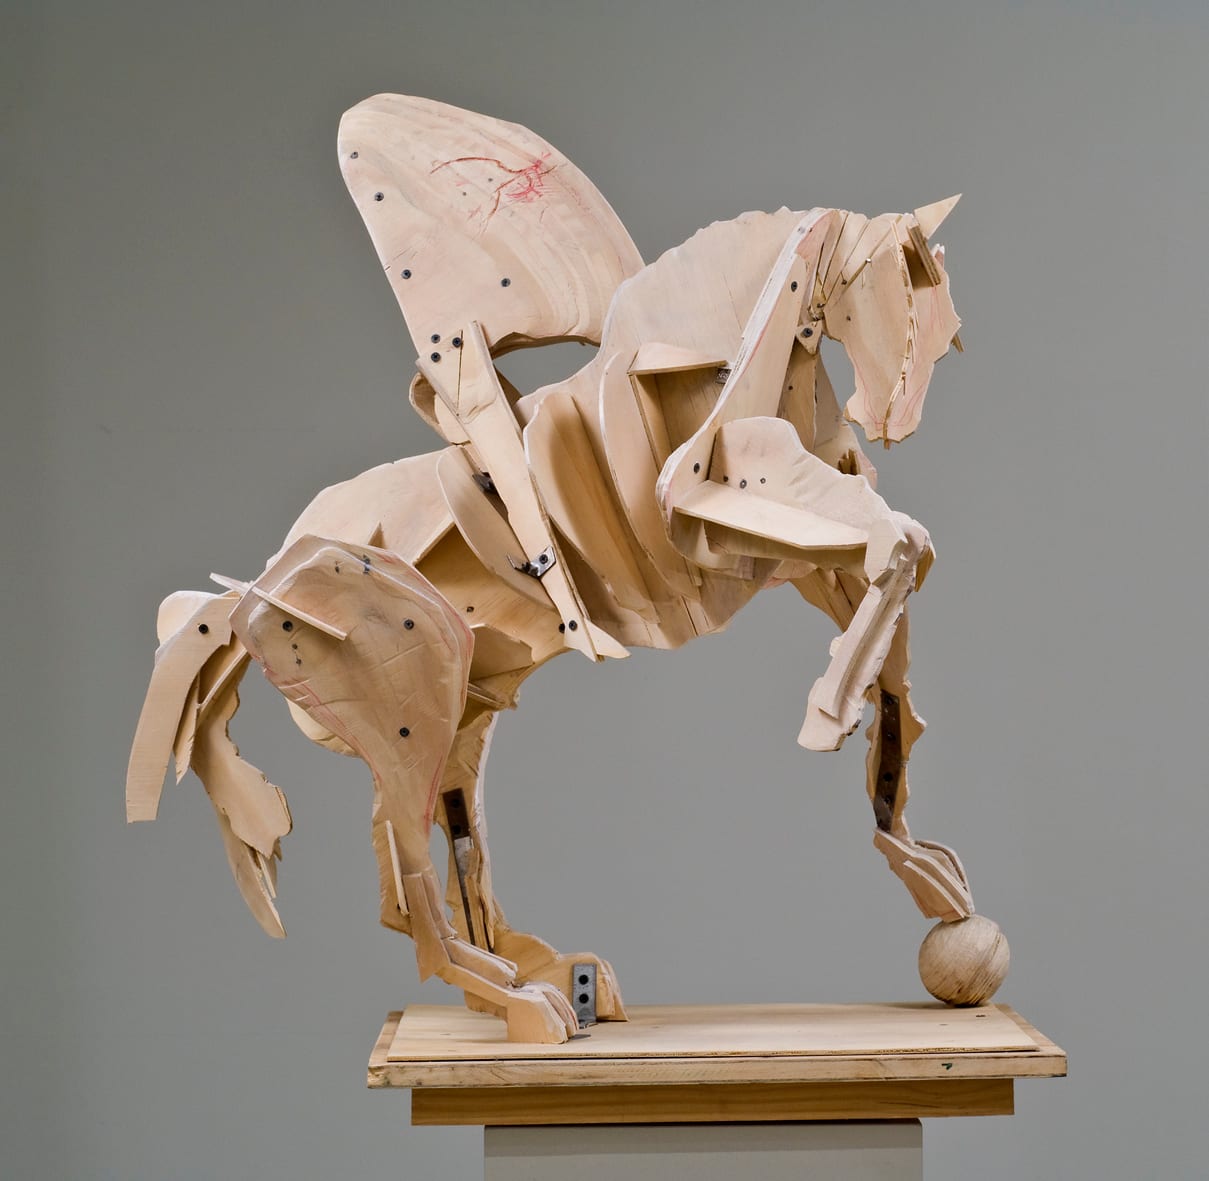 William Kentridge, Wooden Horse II (horse with ball), 2007